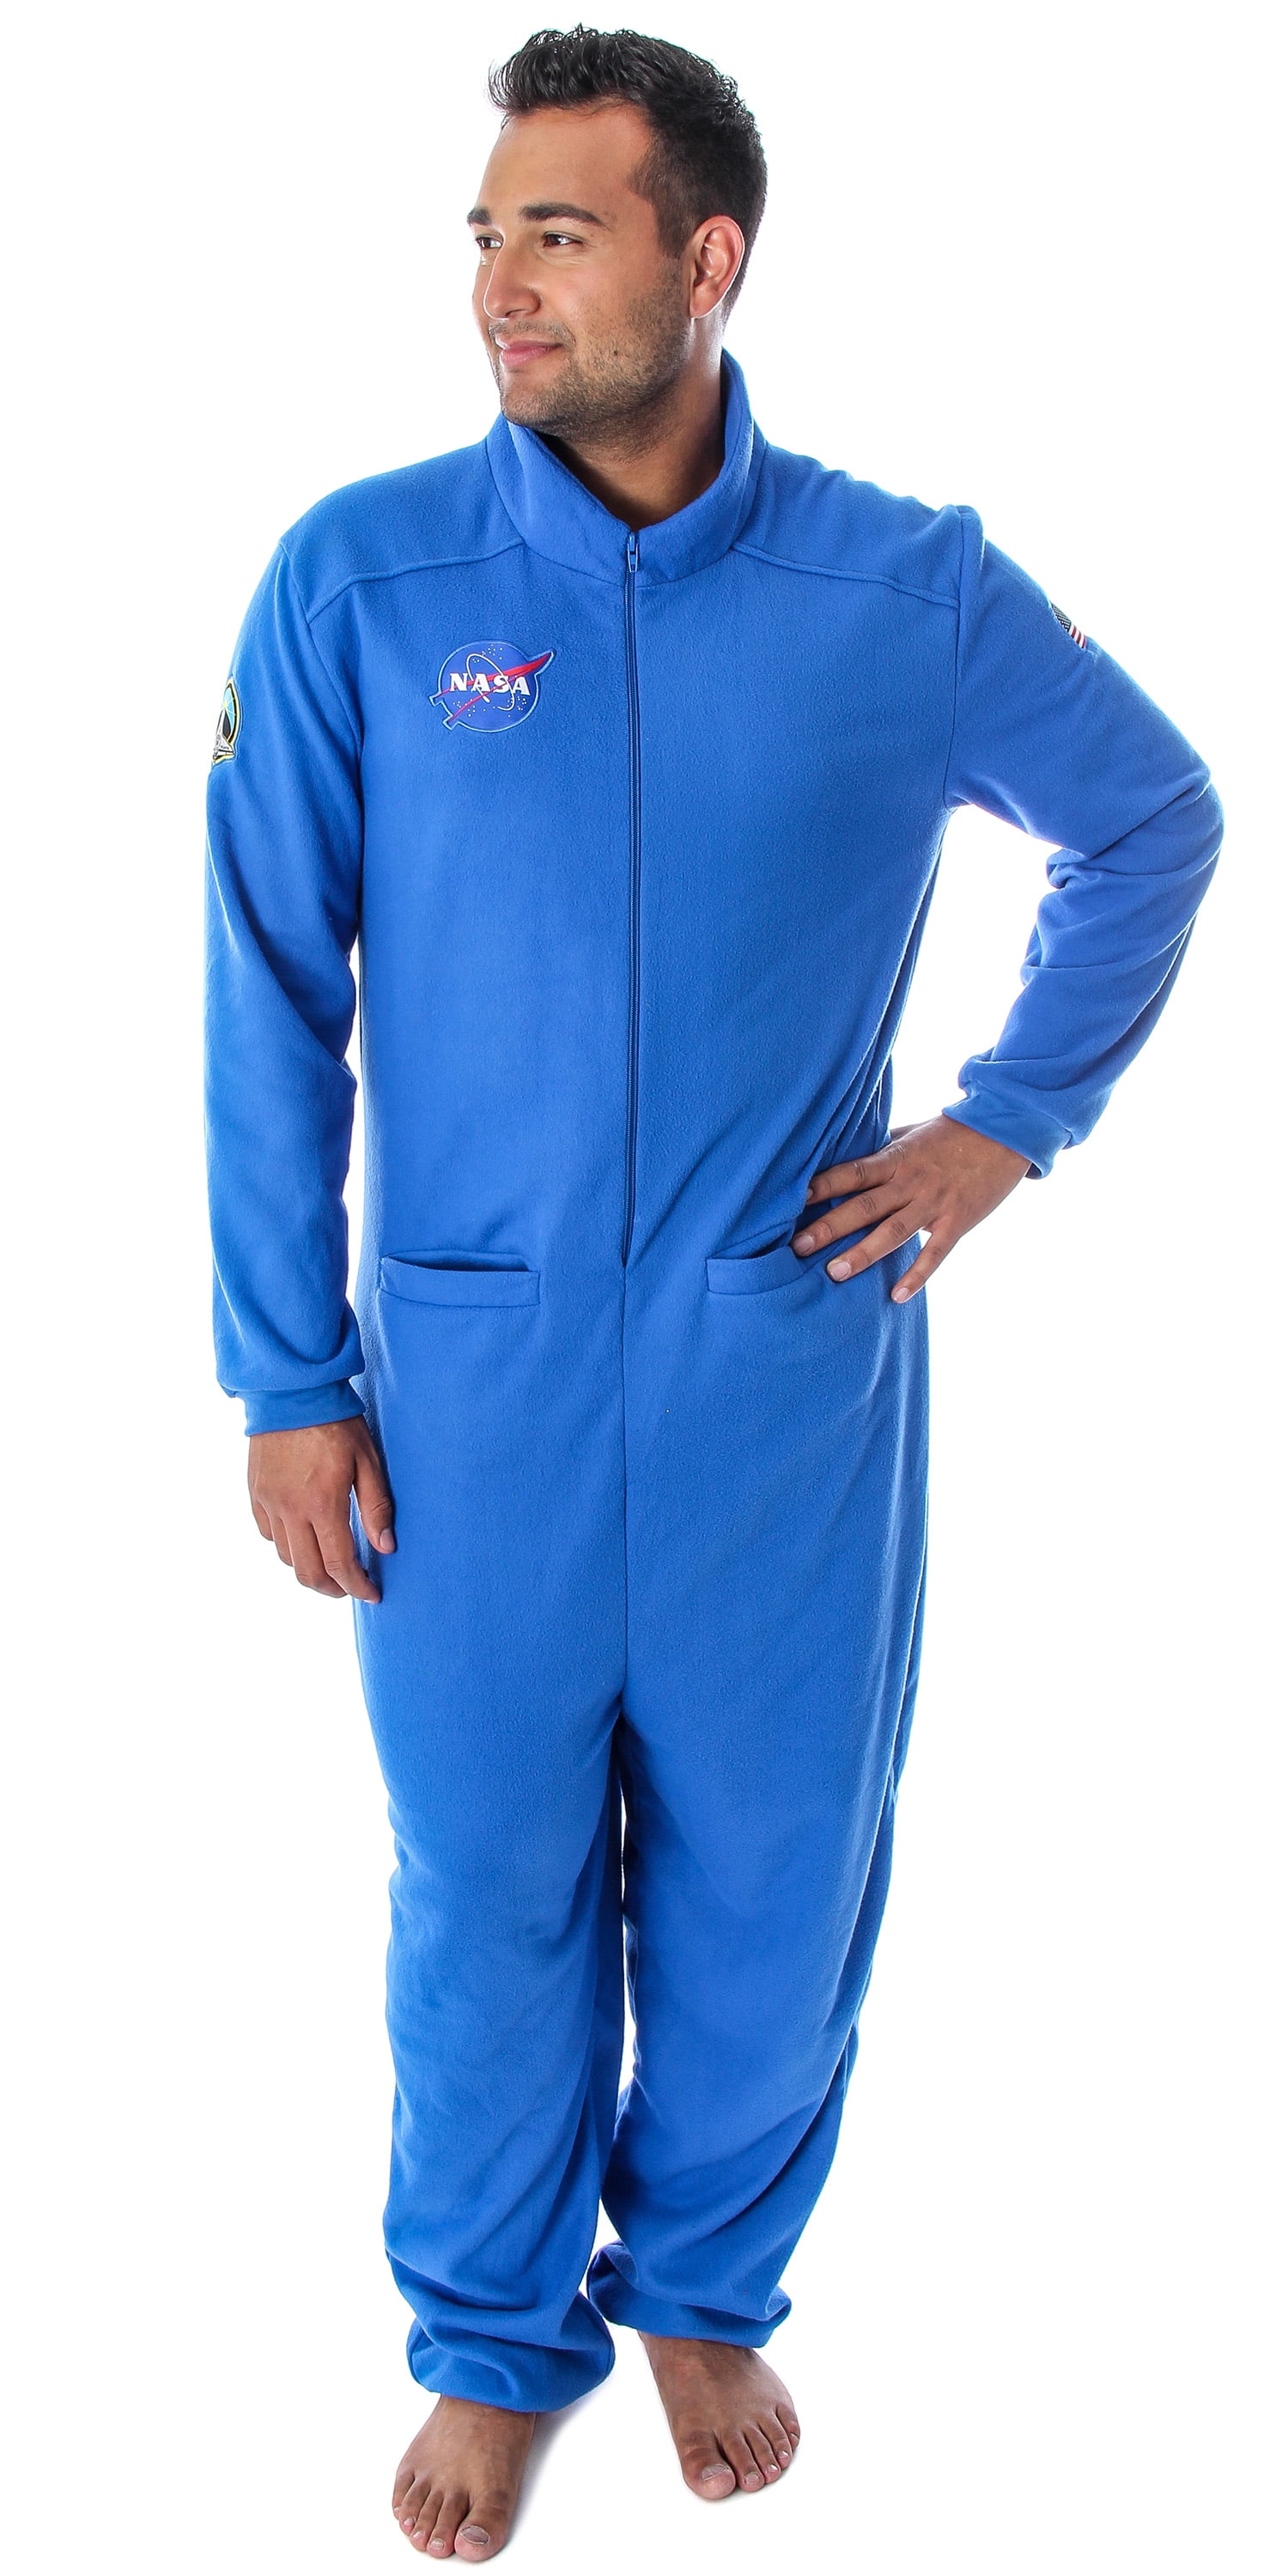 Bioworld Men's XL Orange Astronaut Space Shuttle NASA Costume Pajamas onepiece 